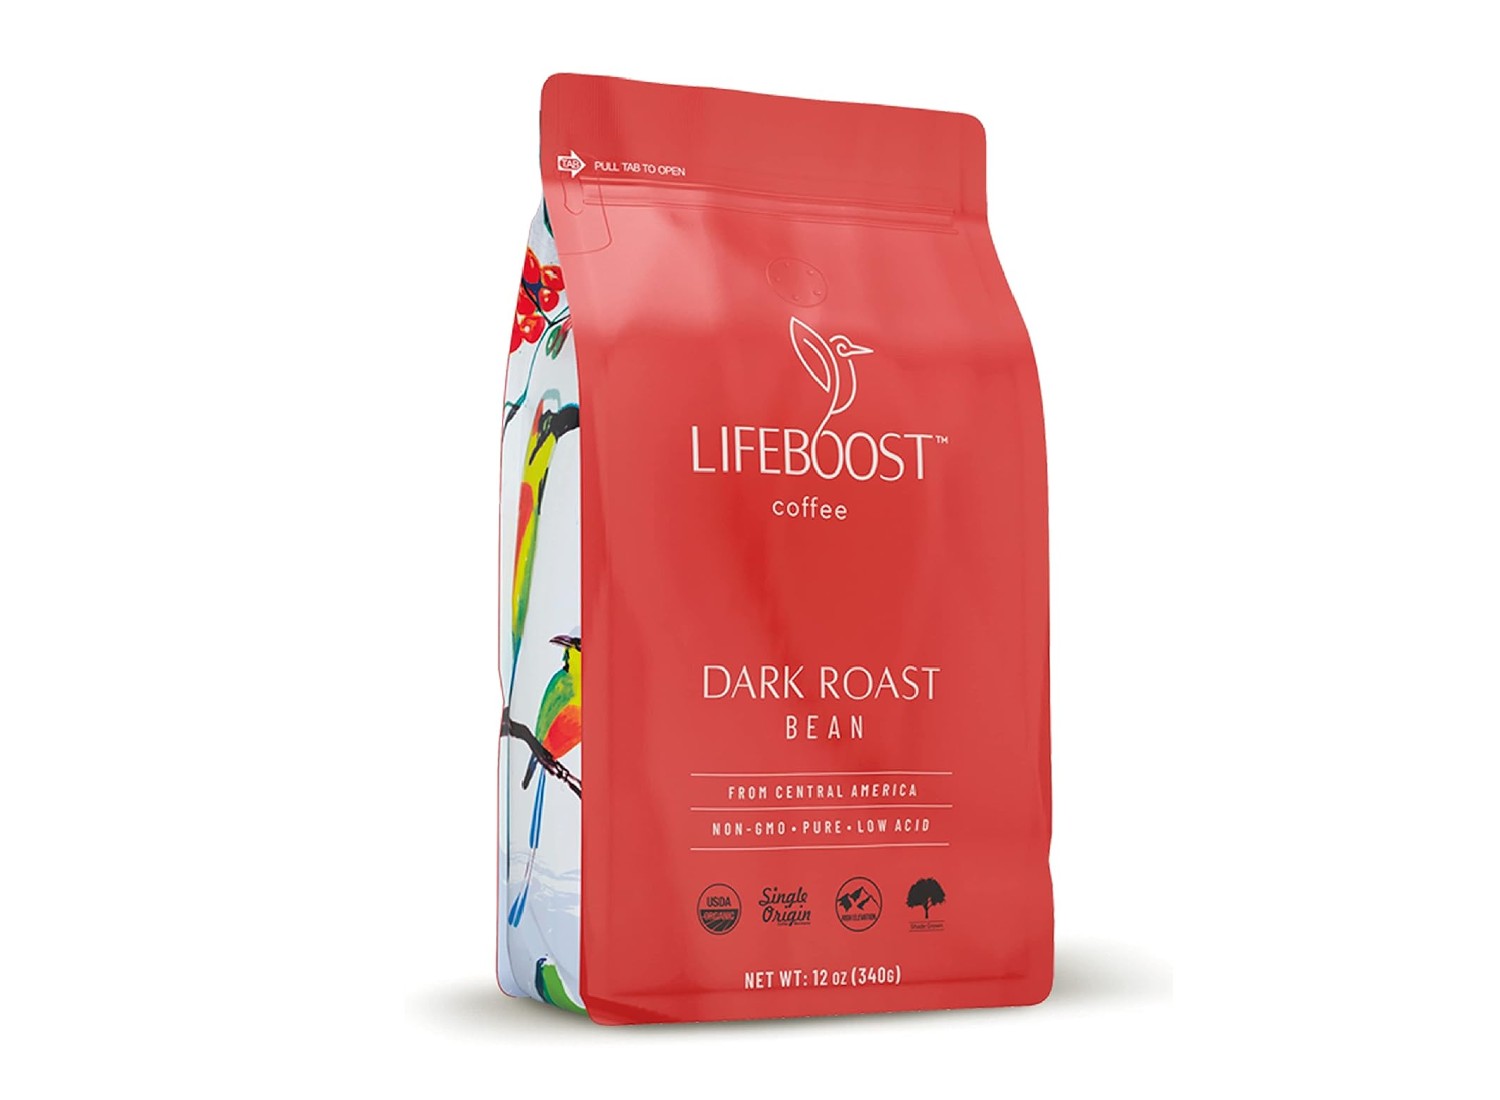 LIFEBOOST Dark Roast Whole Bean Coffee